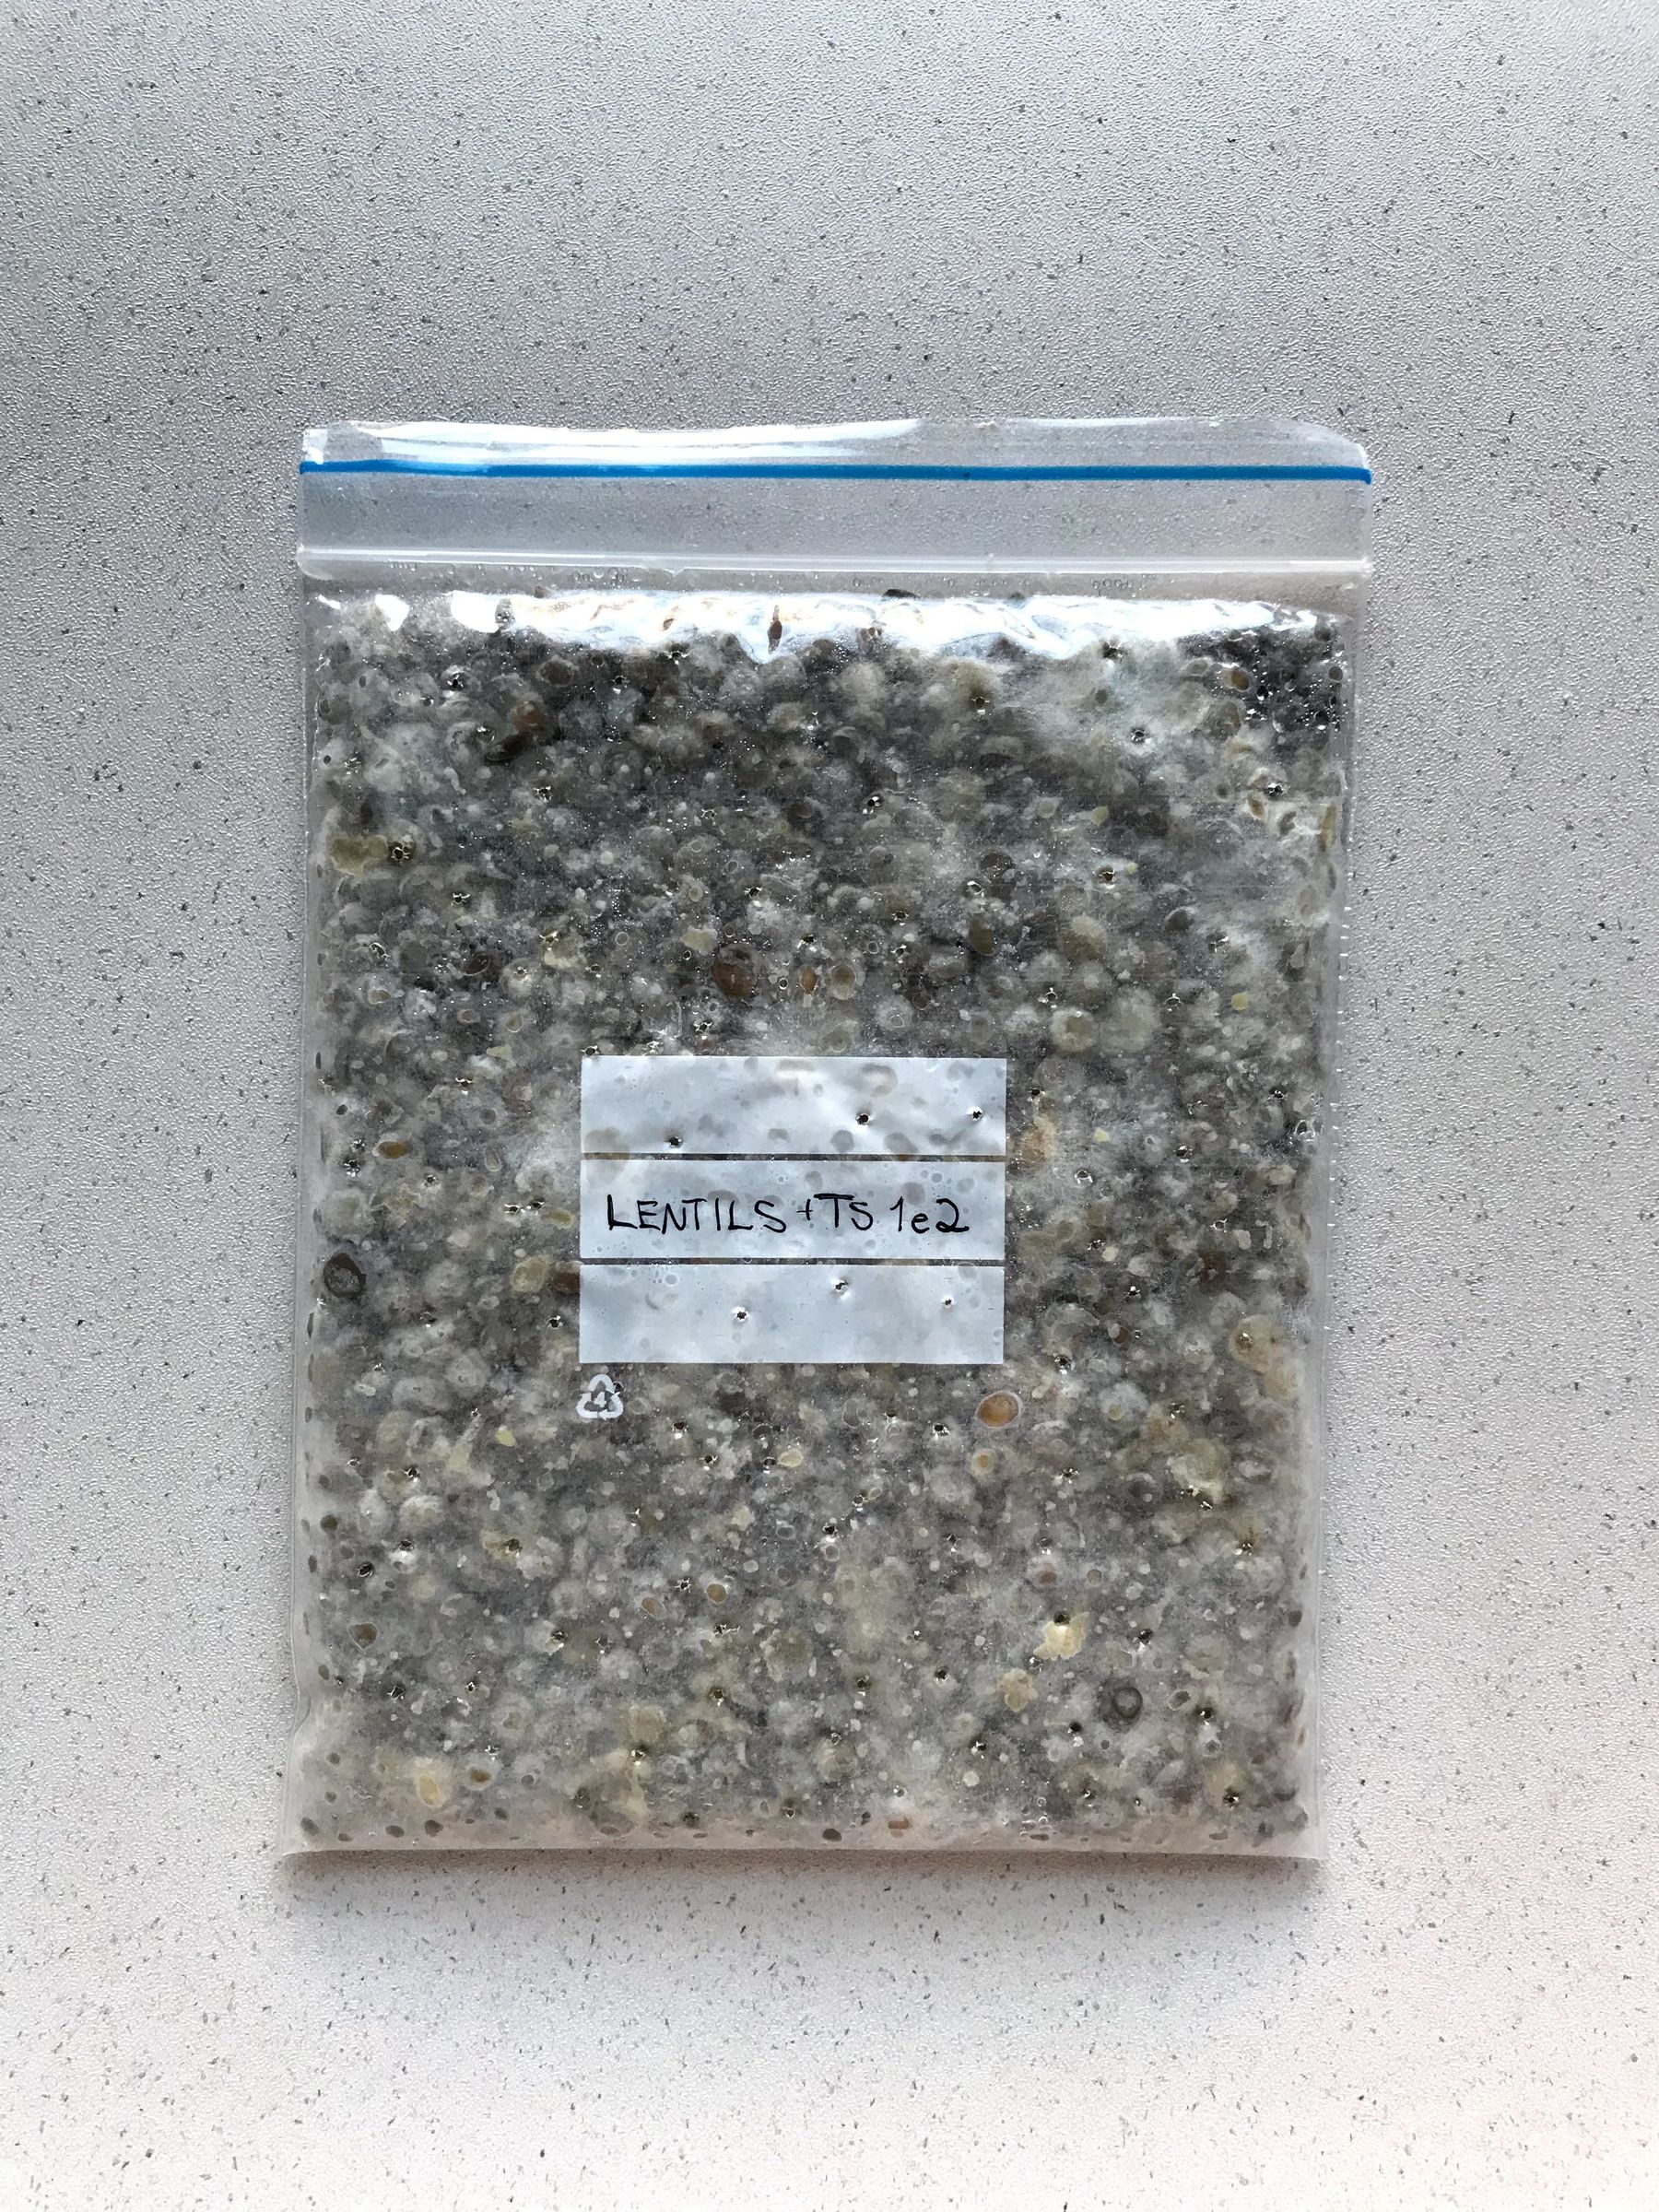 a minigrip bagful of lentils mixed with mycelium